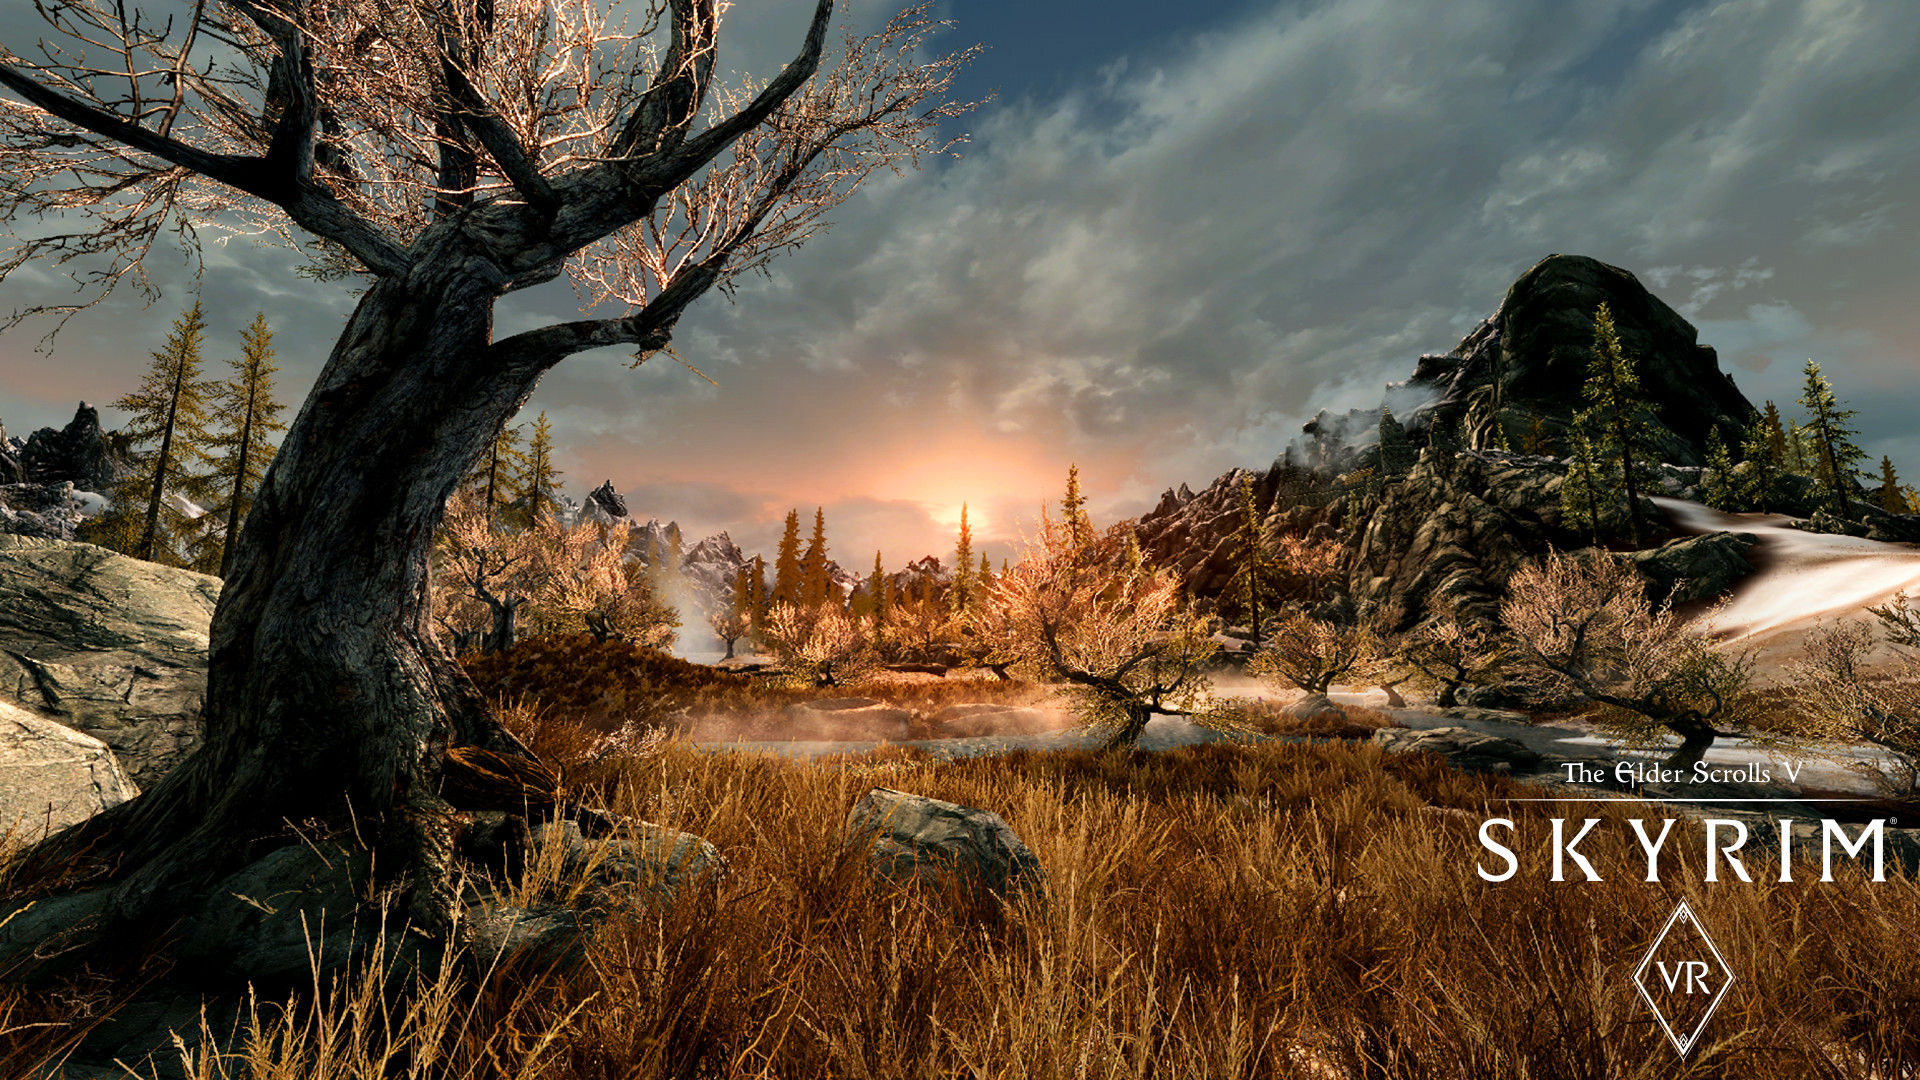 Uberettiget Continental Halvkreds Save 67% on The Elder Scrolls V: Skyrim VR on Steam